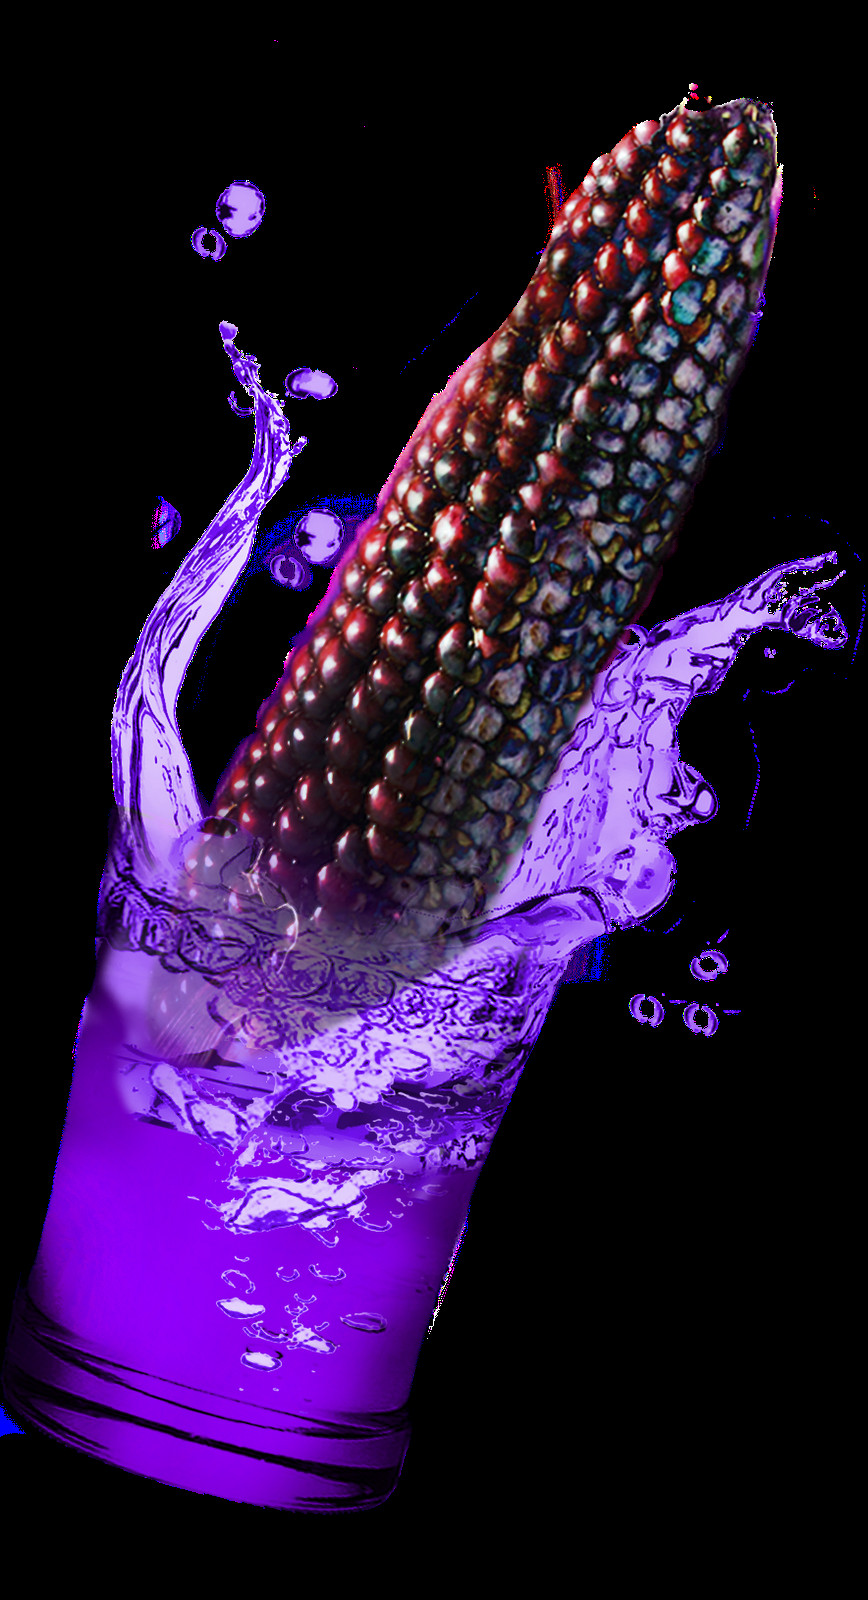 Purple Corn Drink
 Purple Corn Health Benefits Purple Corn Juice